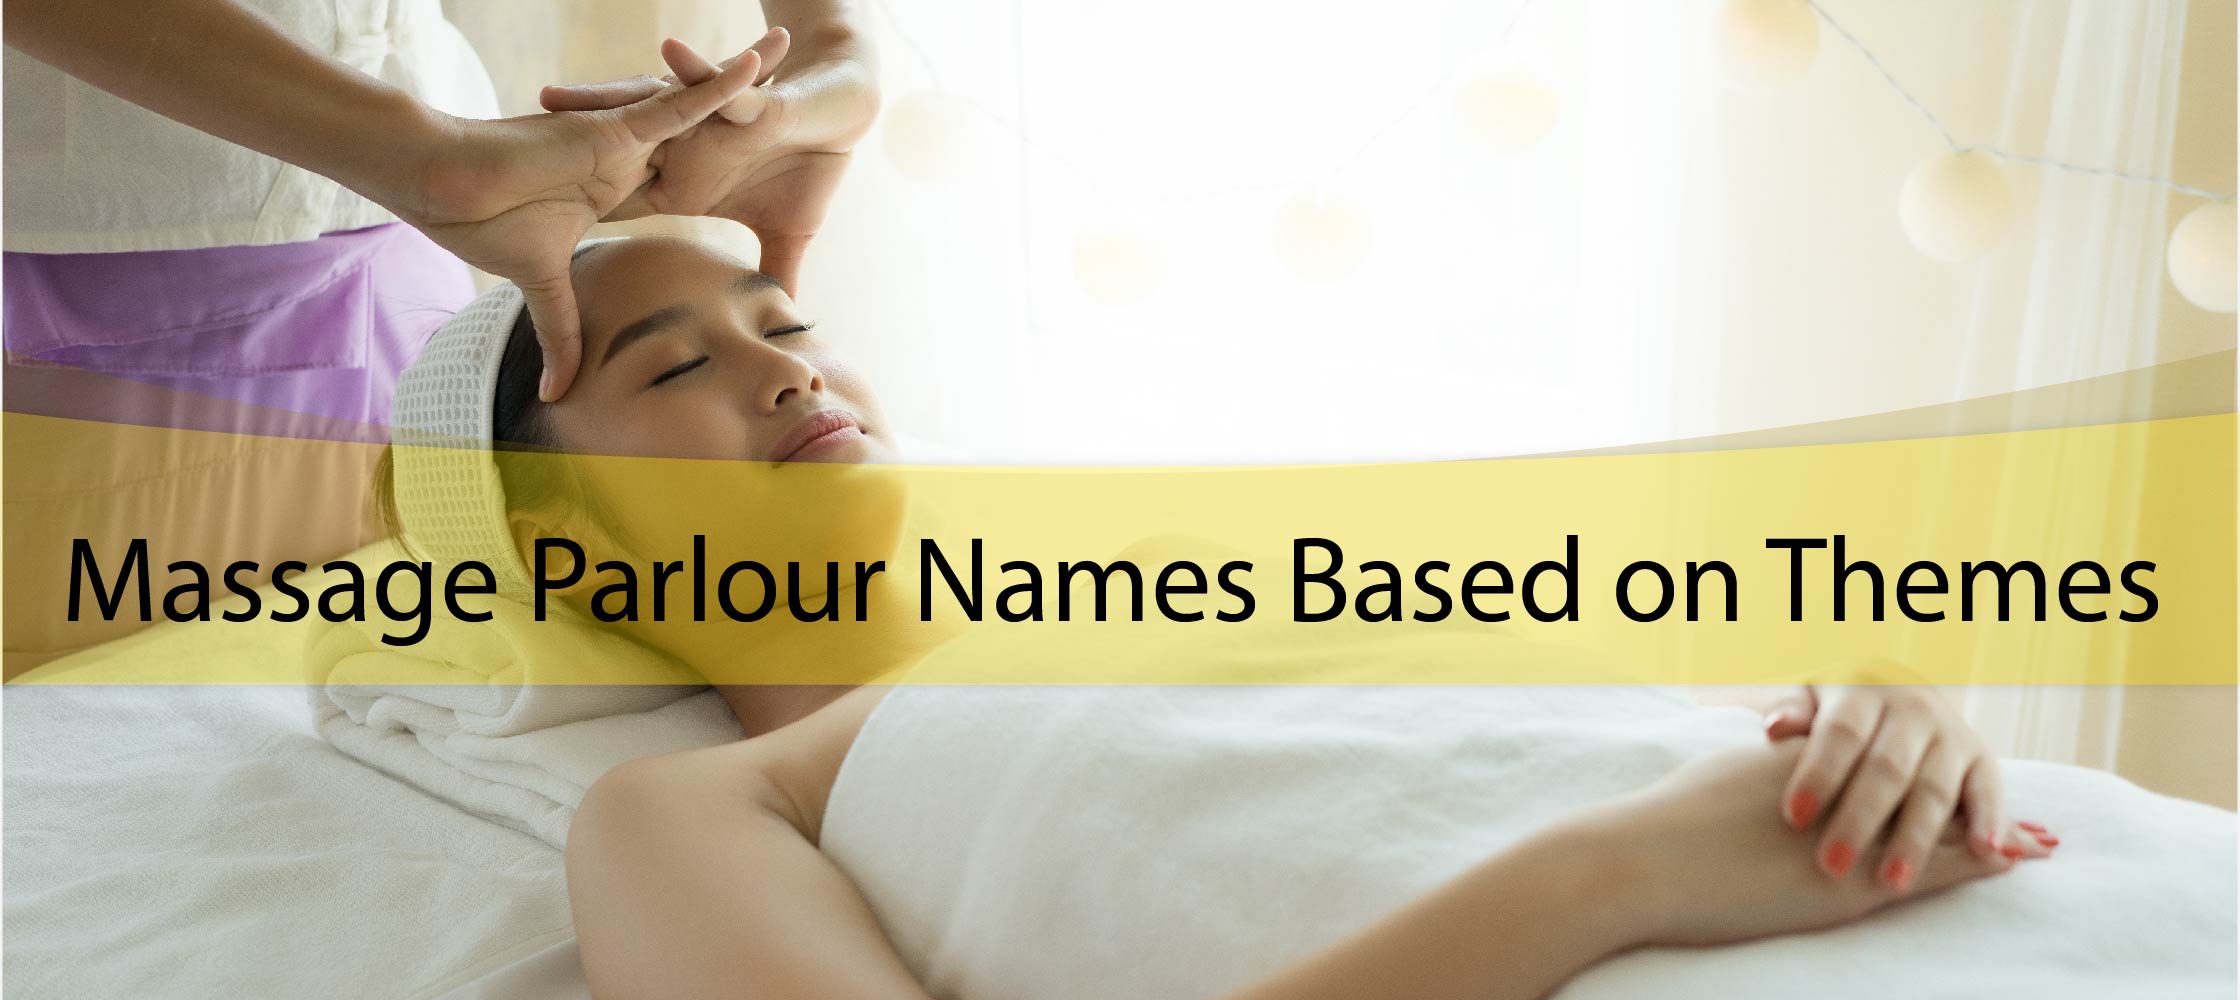 massagr parlour names based on themes